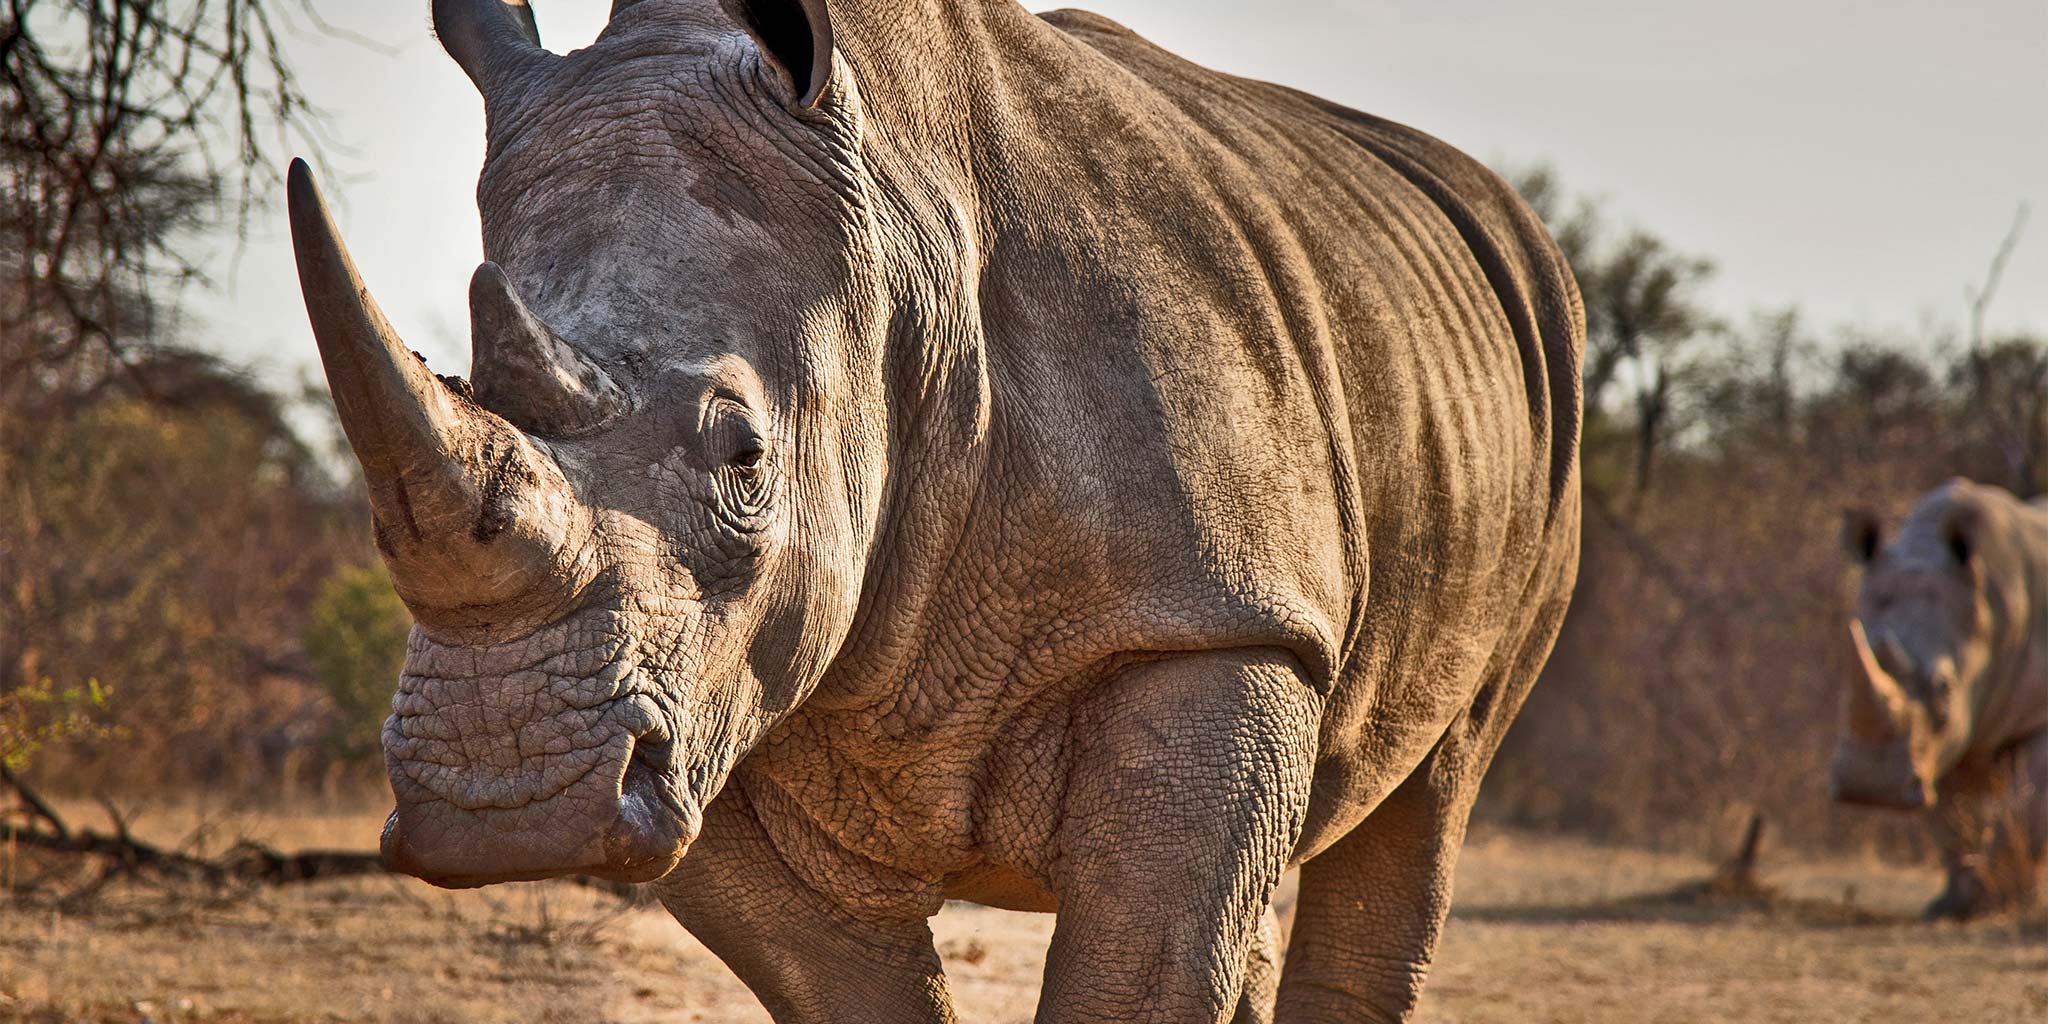 Rhino Close Up on South Africa Safari